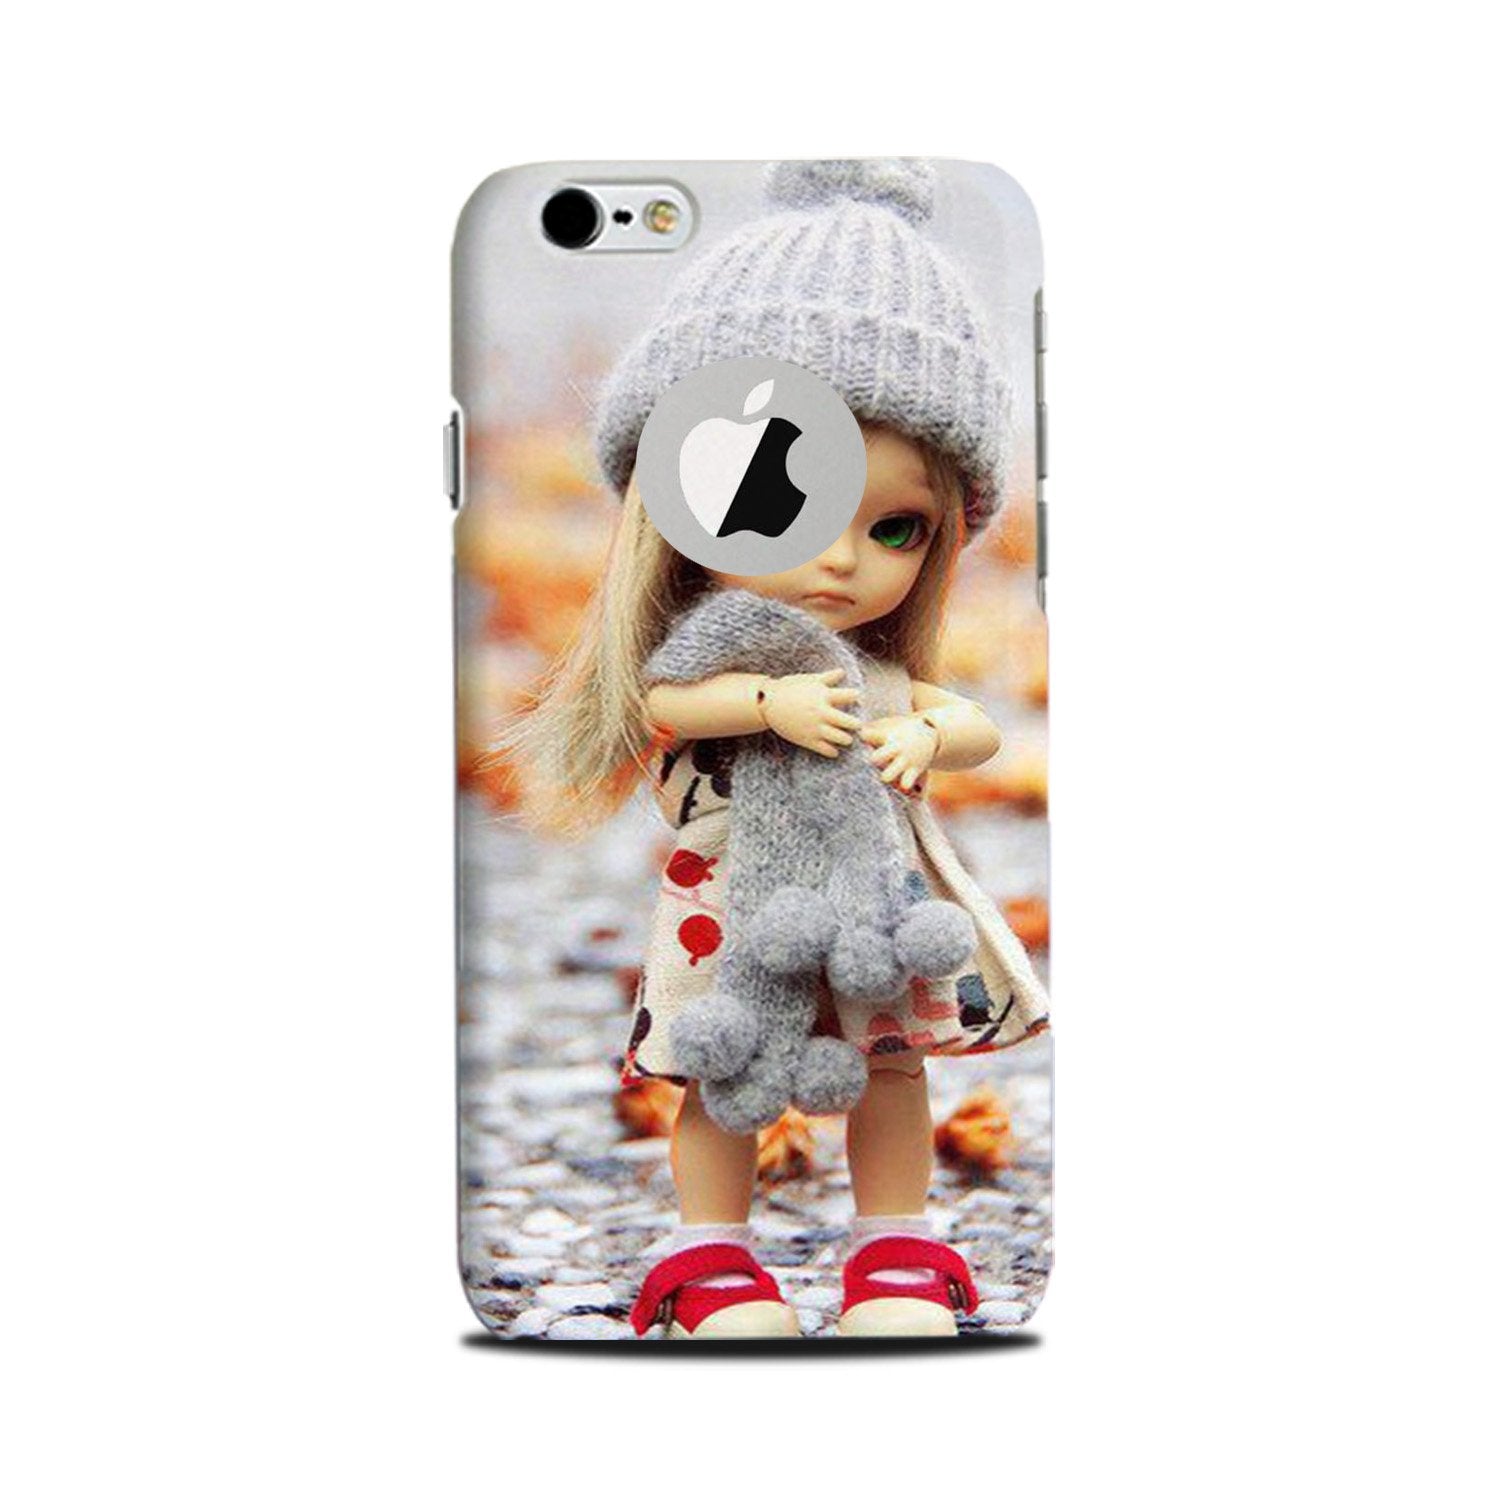 Cute Doll Case for iPhone 6 Plus / 6s Plus logo cut 